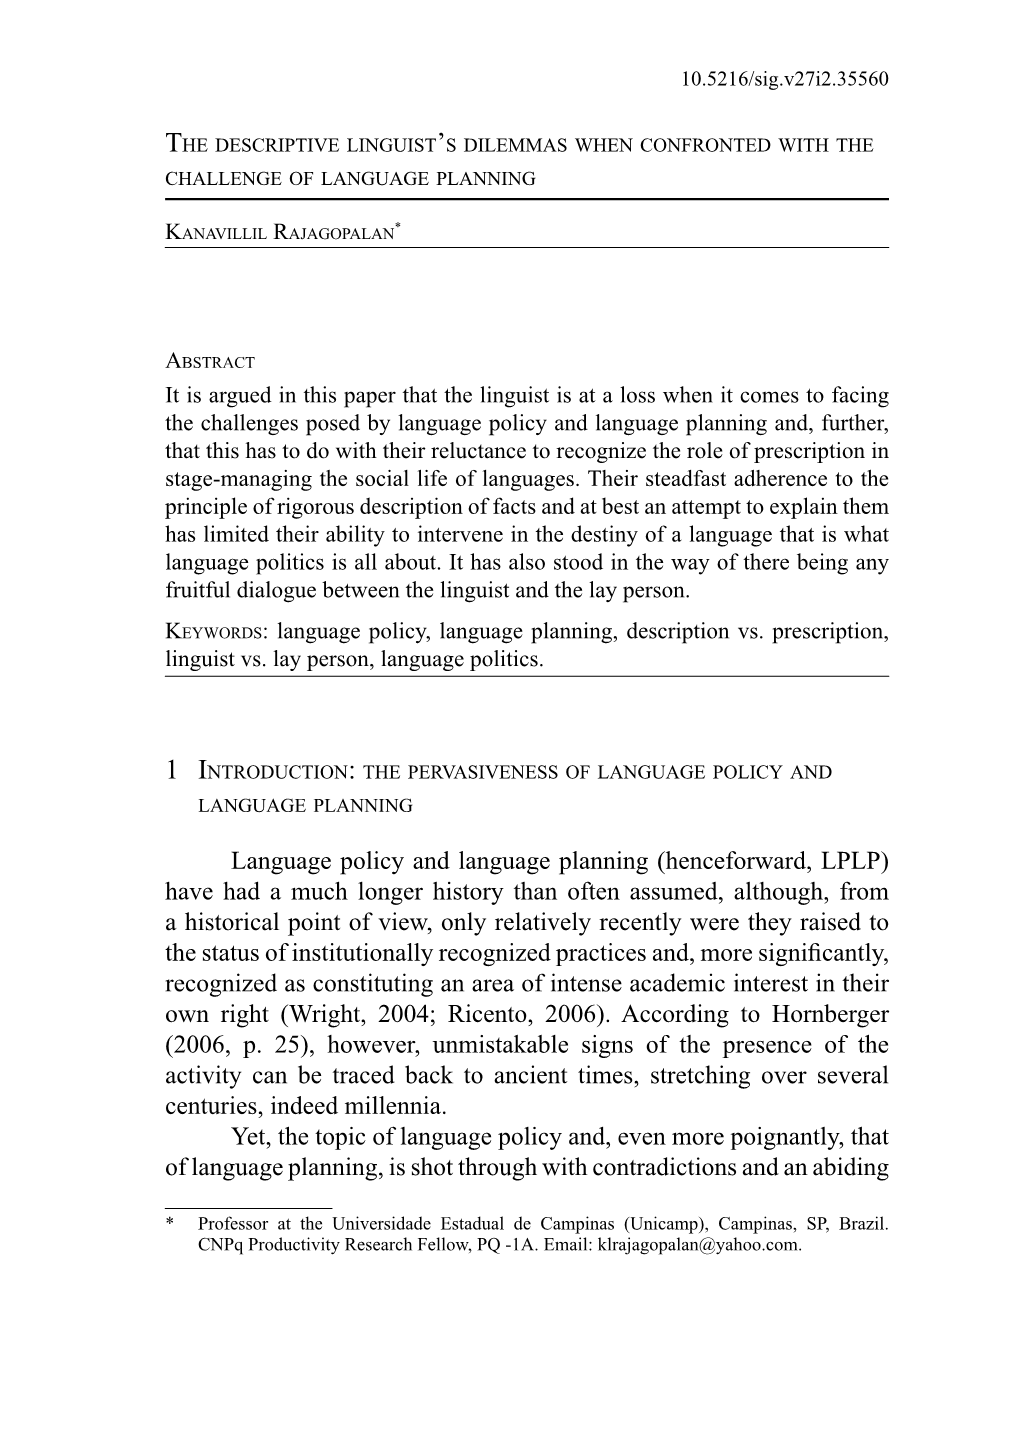 Language Policy and Language Planning